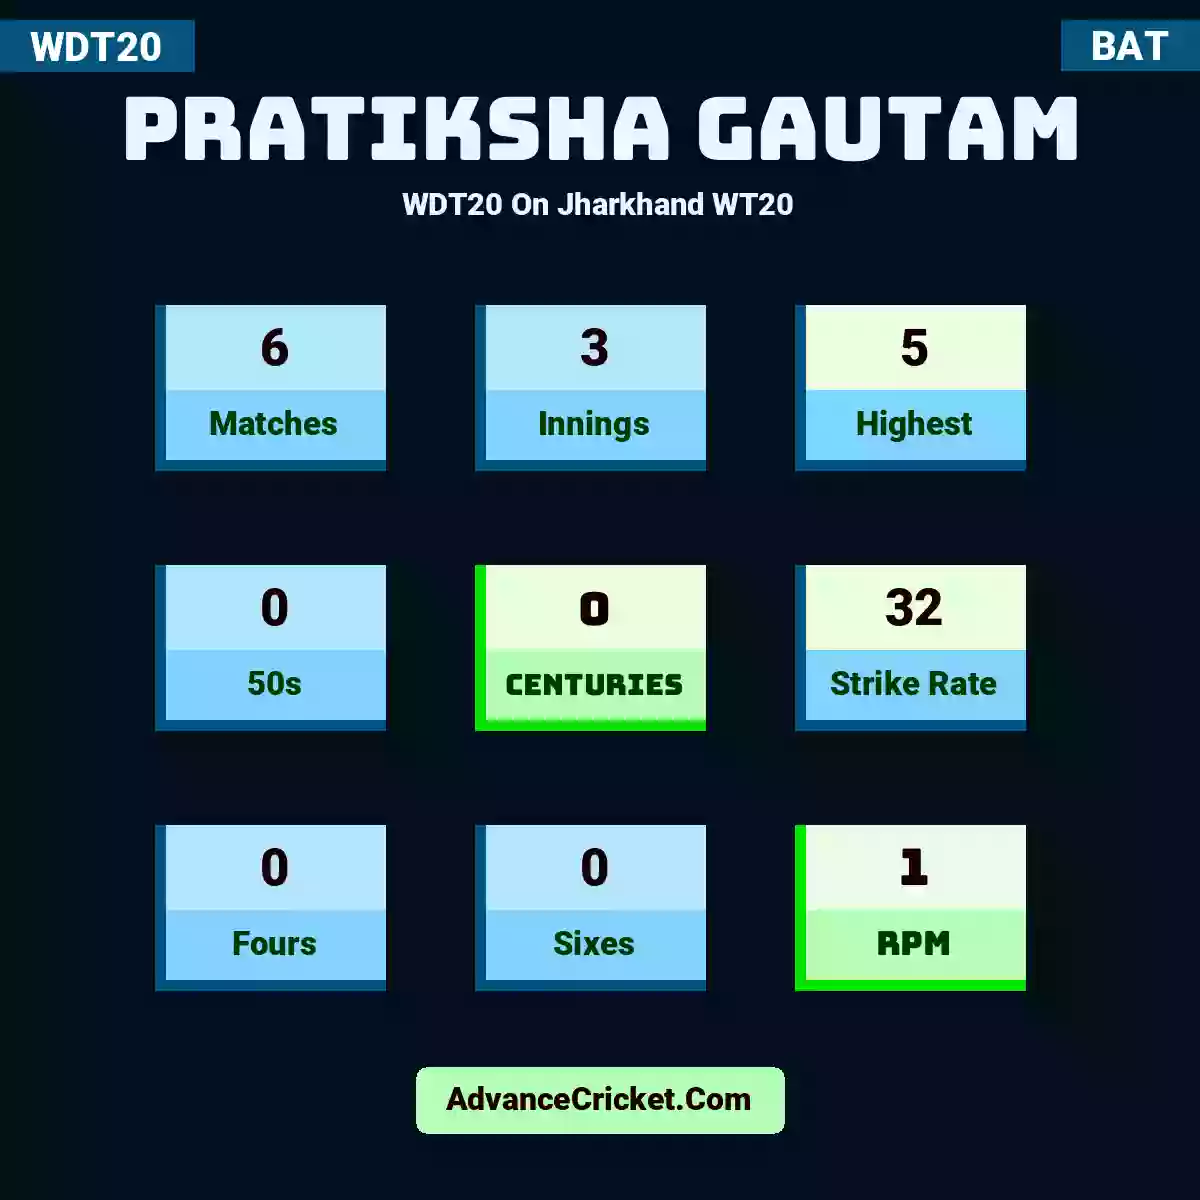 Pratiksha Gautam WDT20  On Jharkhand WT20, Pratiksha Gautam played 6 matches, scored 5 runs as highest, 0 half-centuries, and 0 centuries, with a strike rate of 32. P.Gautam hit 0 fours and 0 sixes, with an RPM of 1.